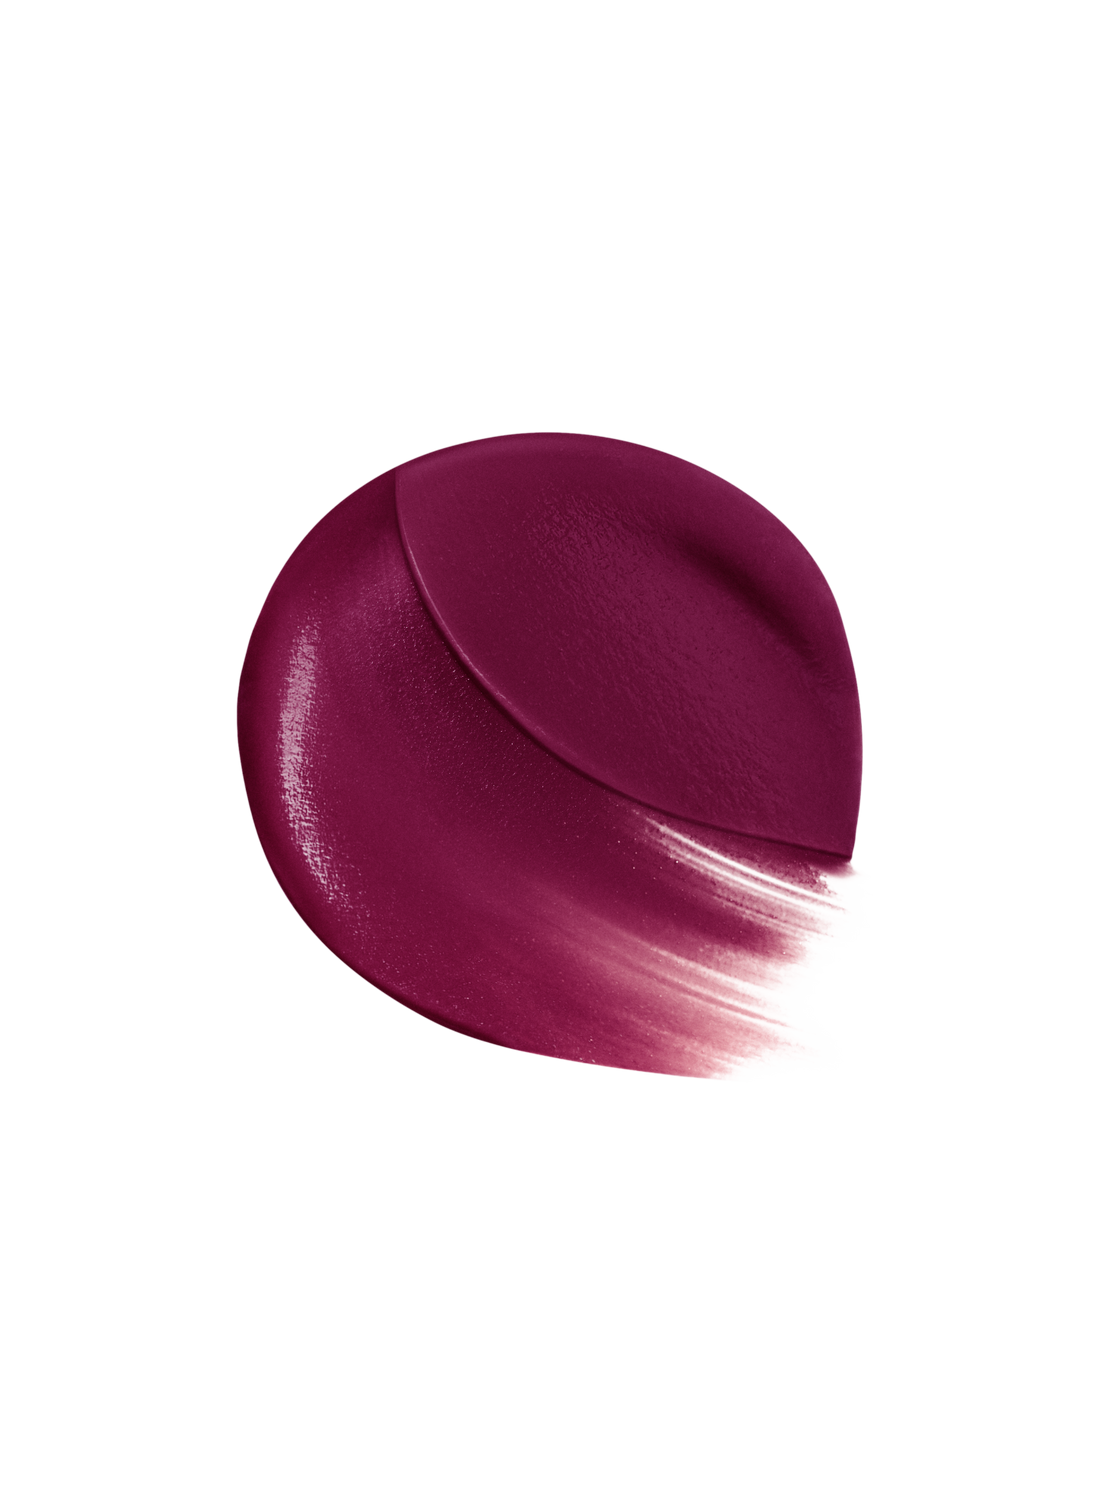 Lip Soufflé Matte Cream Lipstick / Strengthen - Rare Beauty by Selena Gomez.